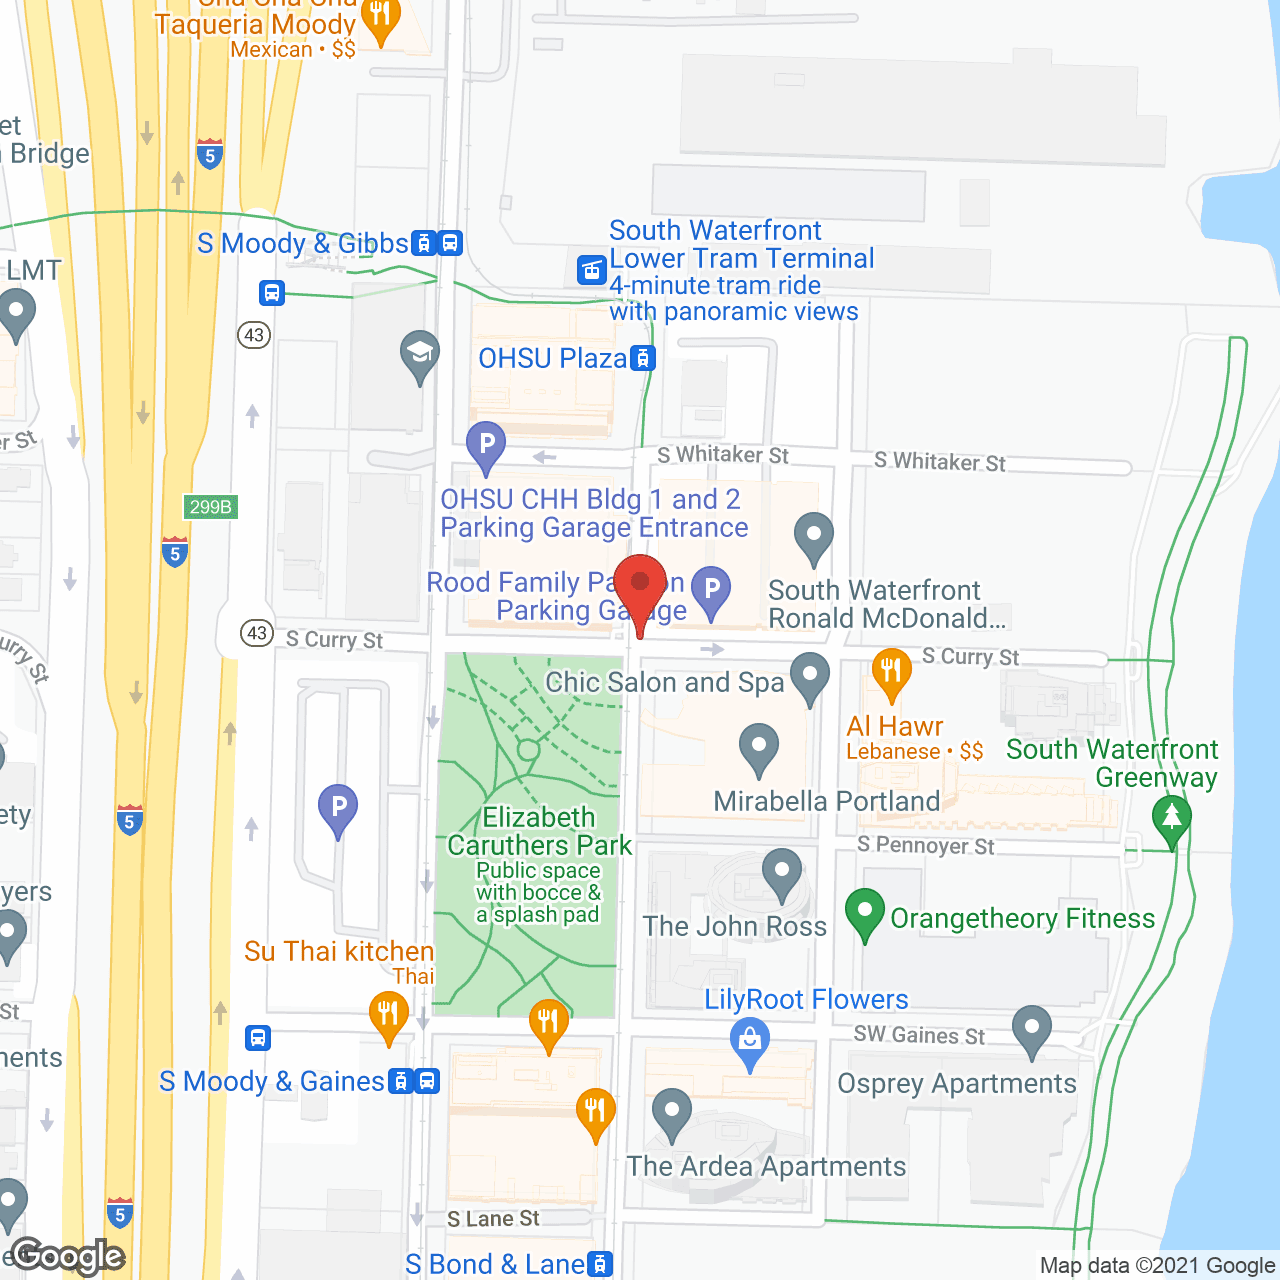 Mirabella Portland - CCRC in google map